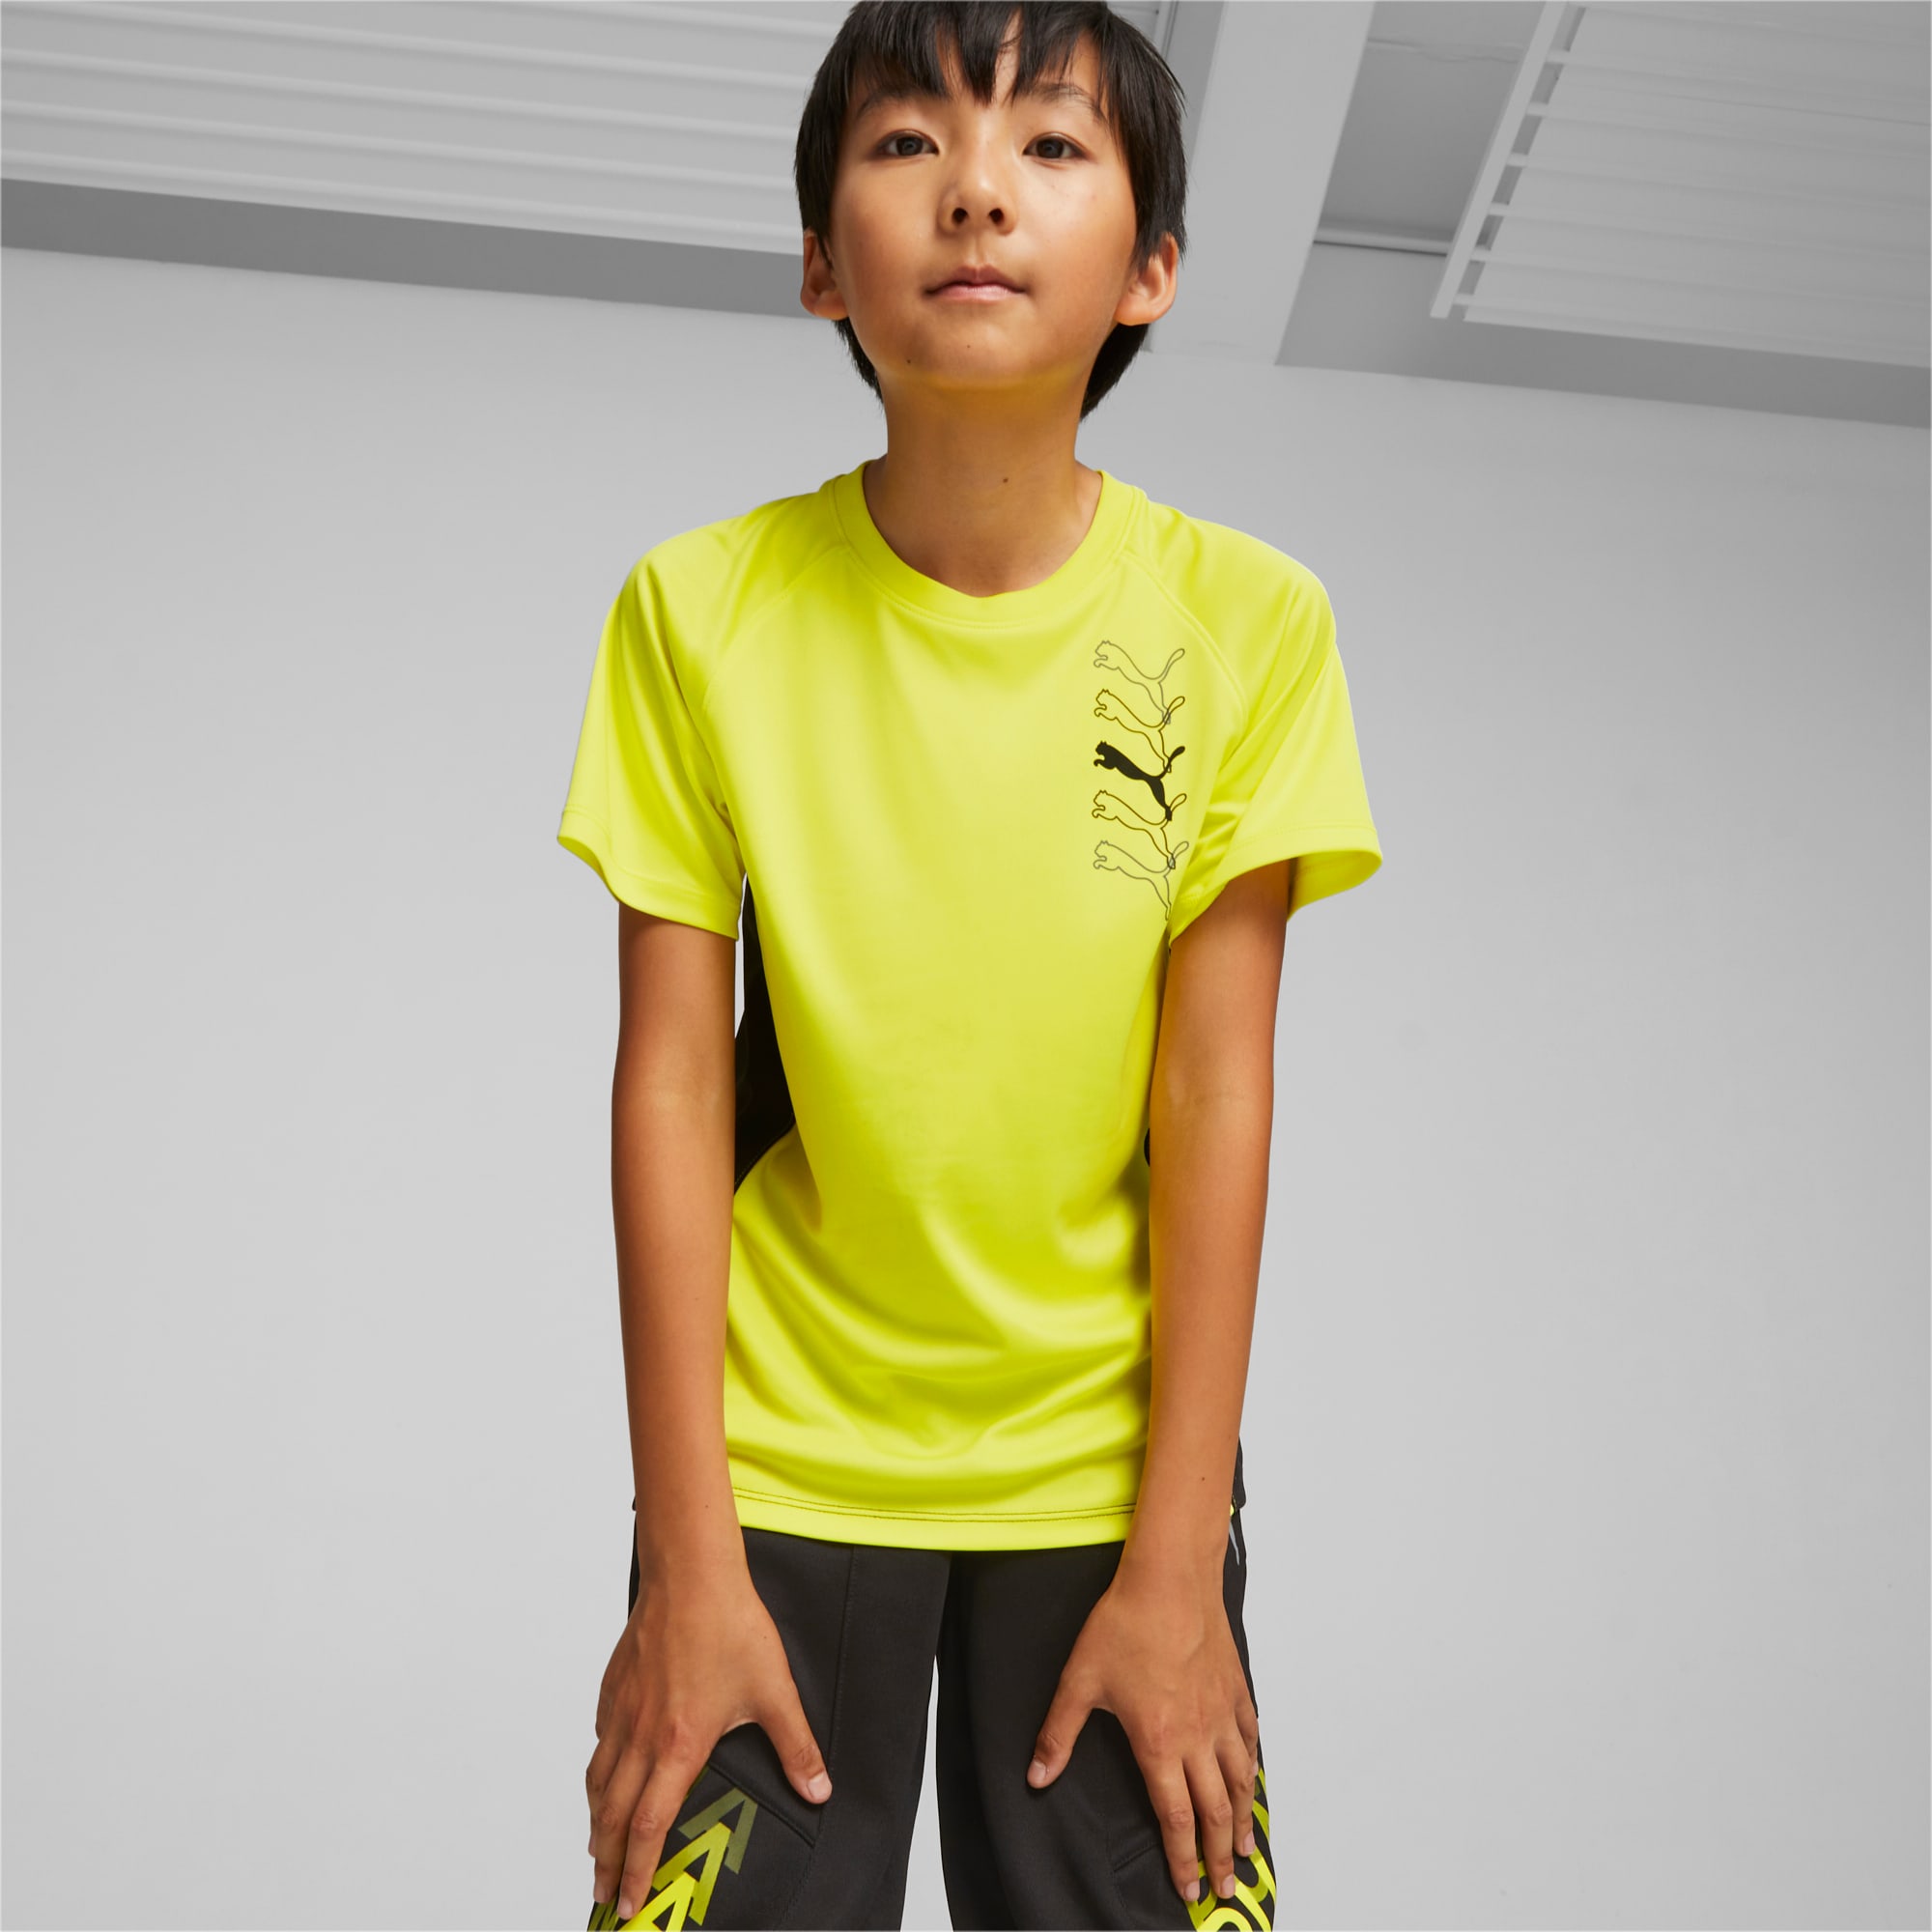 PUMA Fit Youth T-Shirt, Yellow Burst, Size 116, Clothing